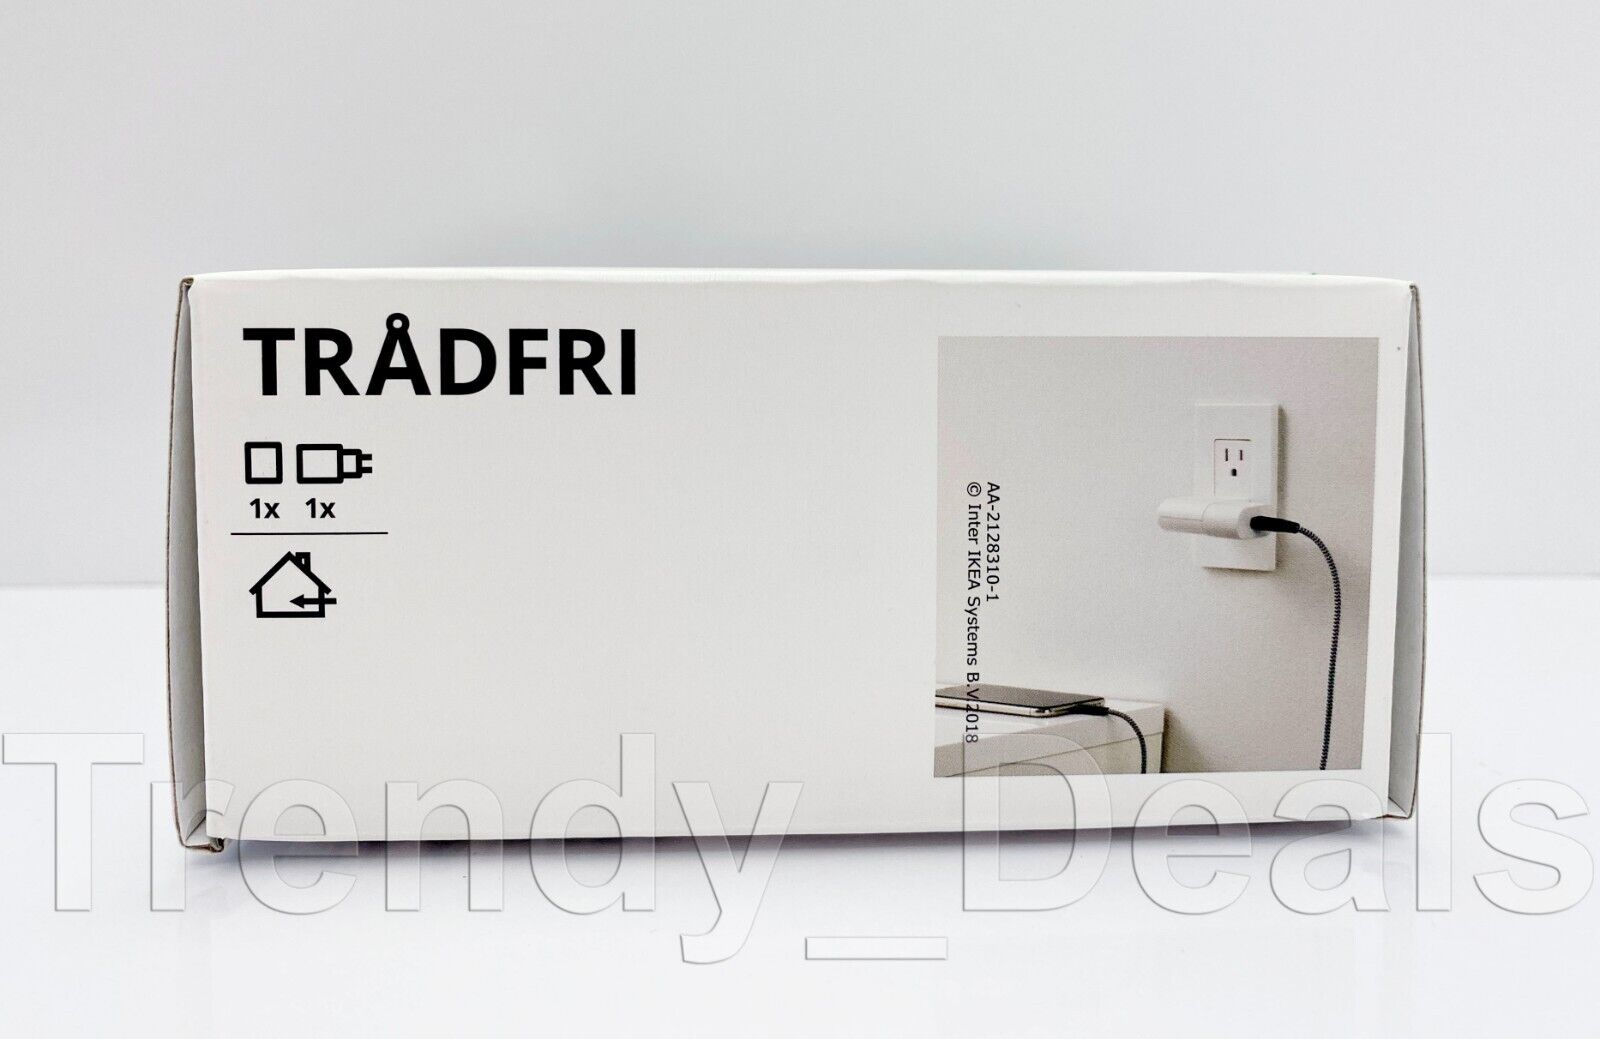 Postimpressionisme Se venligst ekstensivt Ikea TRÅDFRI TRADFRI Signal Repeater + USB Charger Smart Home, White  304.004.07 | eBay